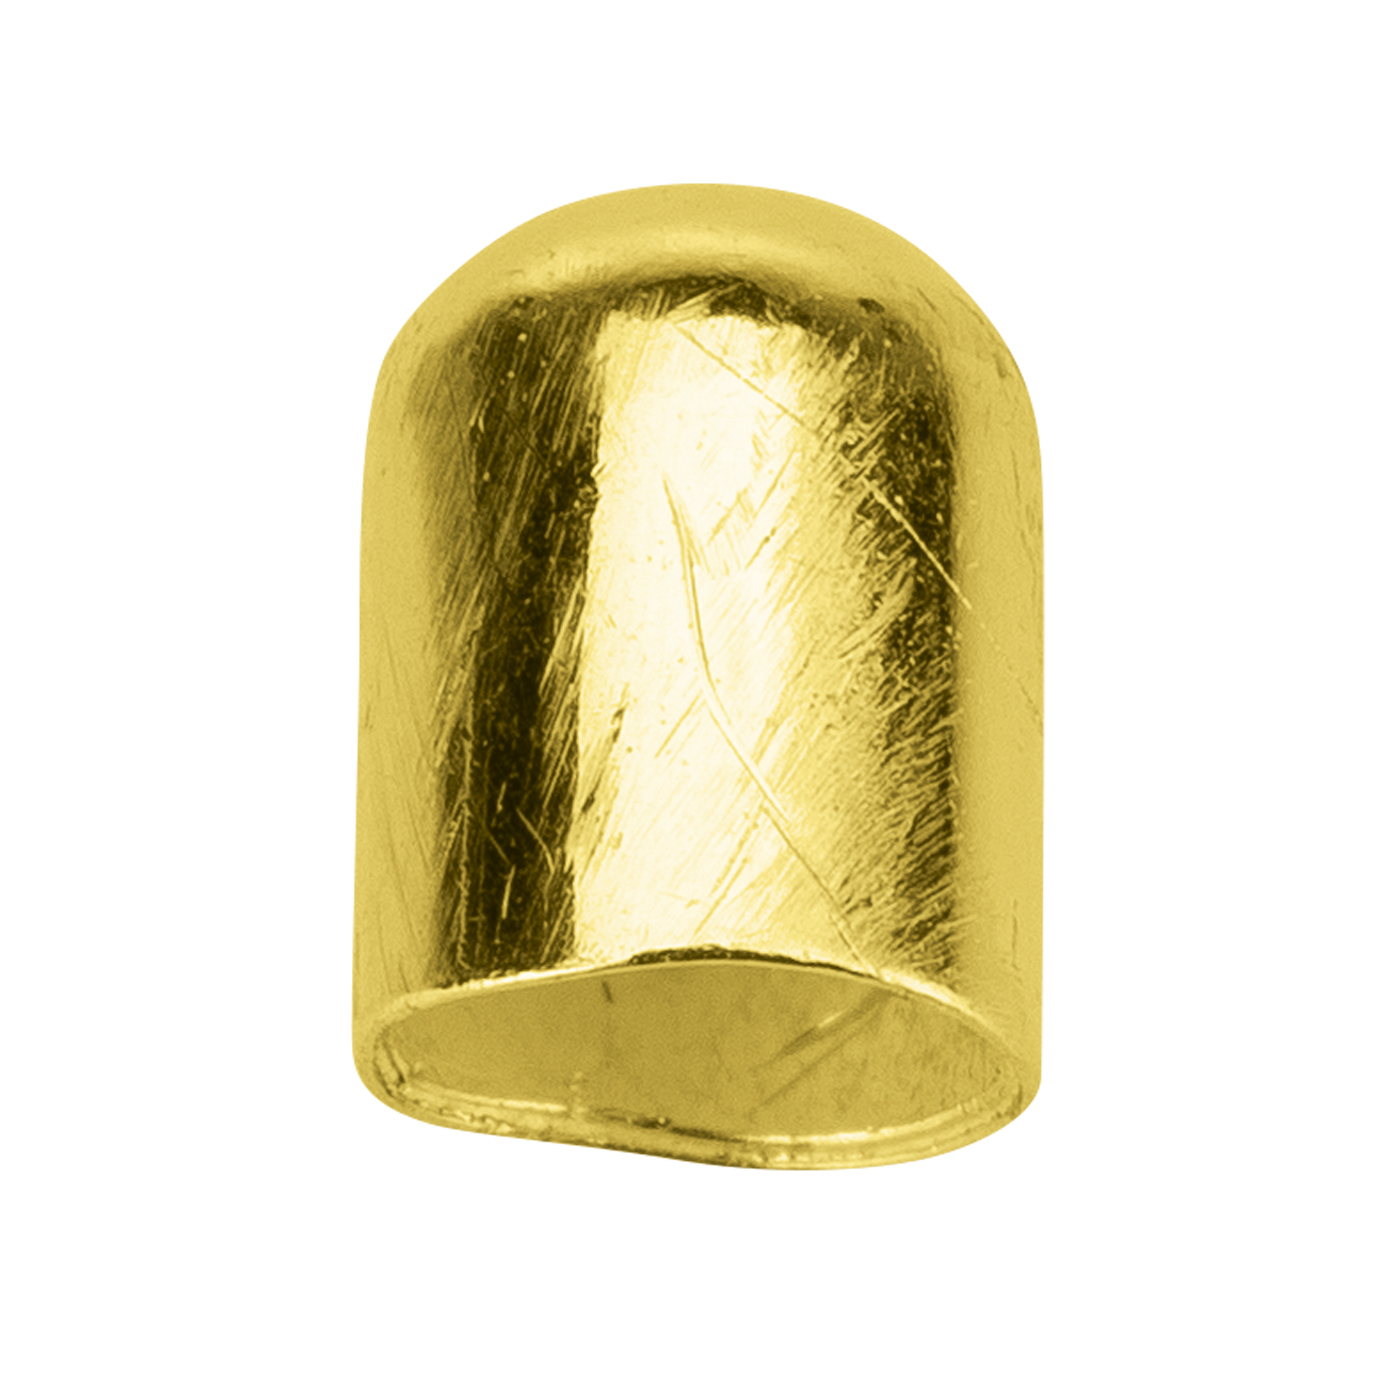 Endkappe, 925 Ag vergoldet, ø 2,5 mm, ohne Öse - 1 Stück